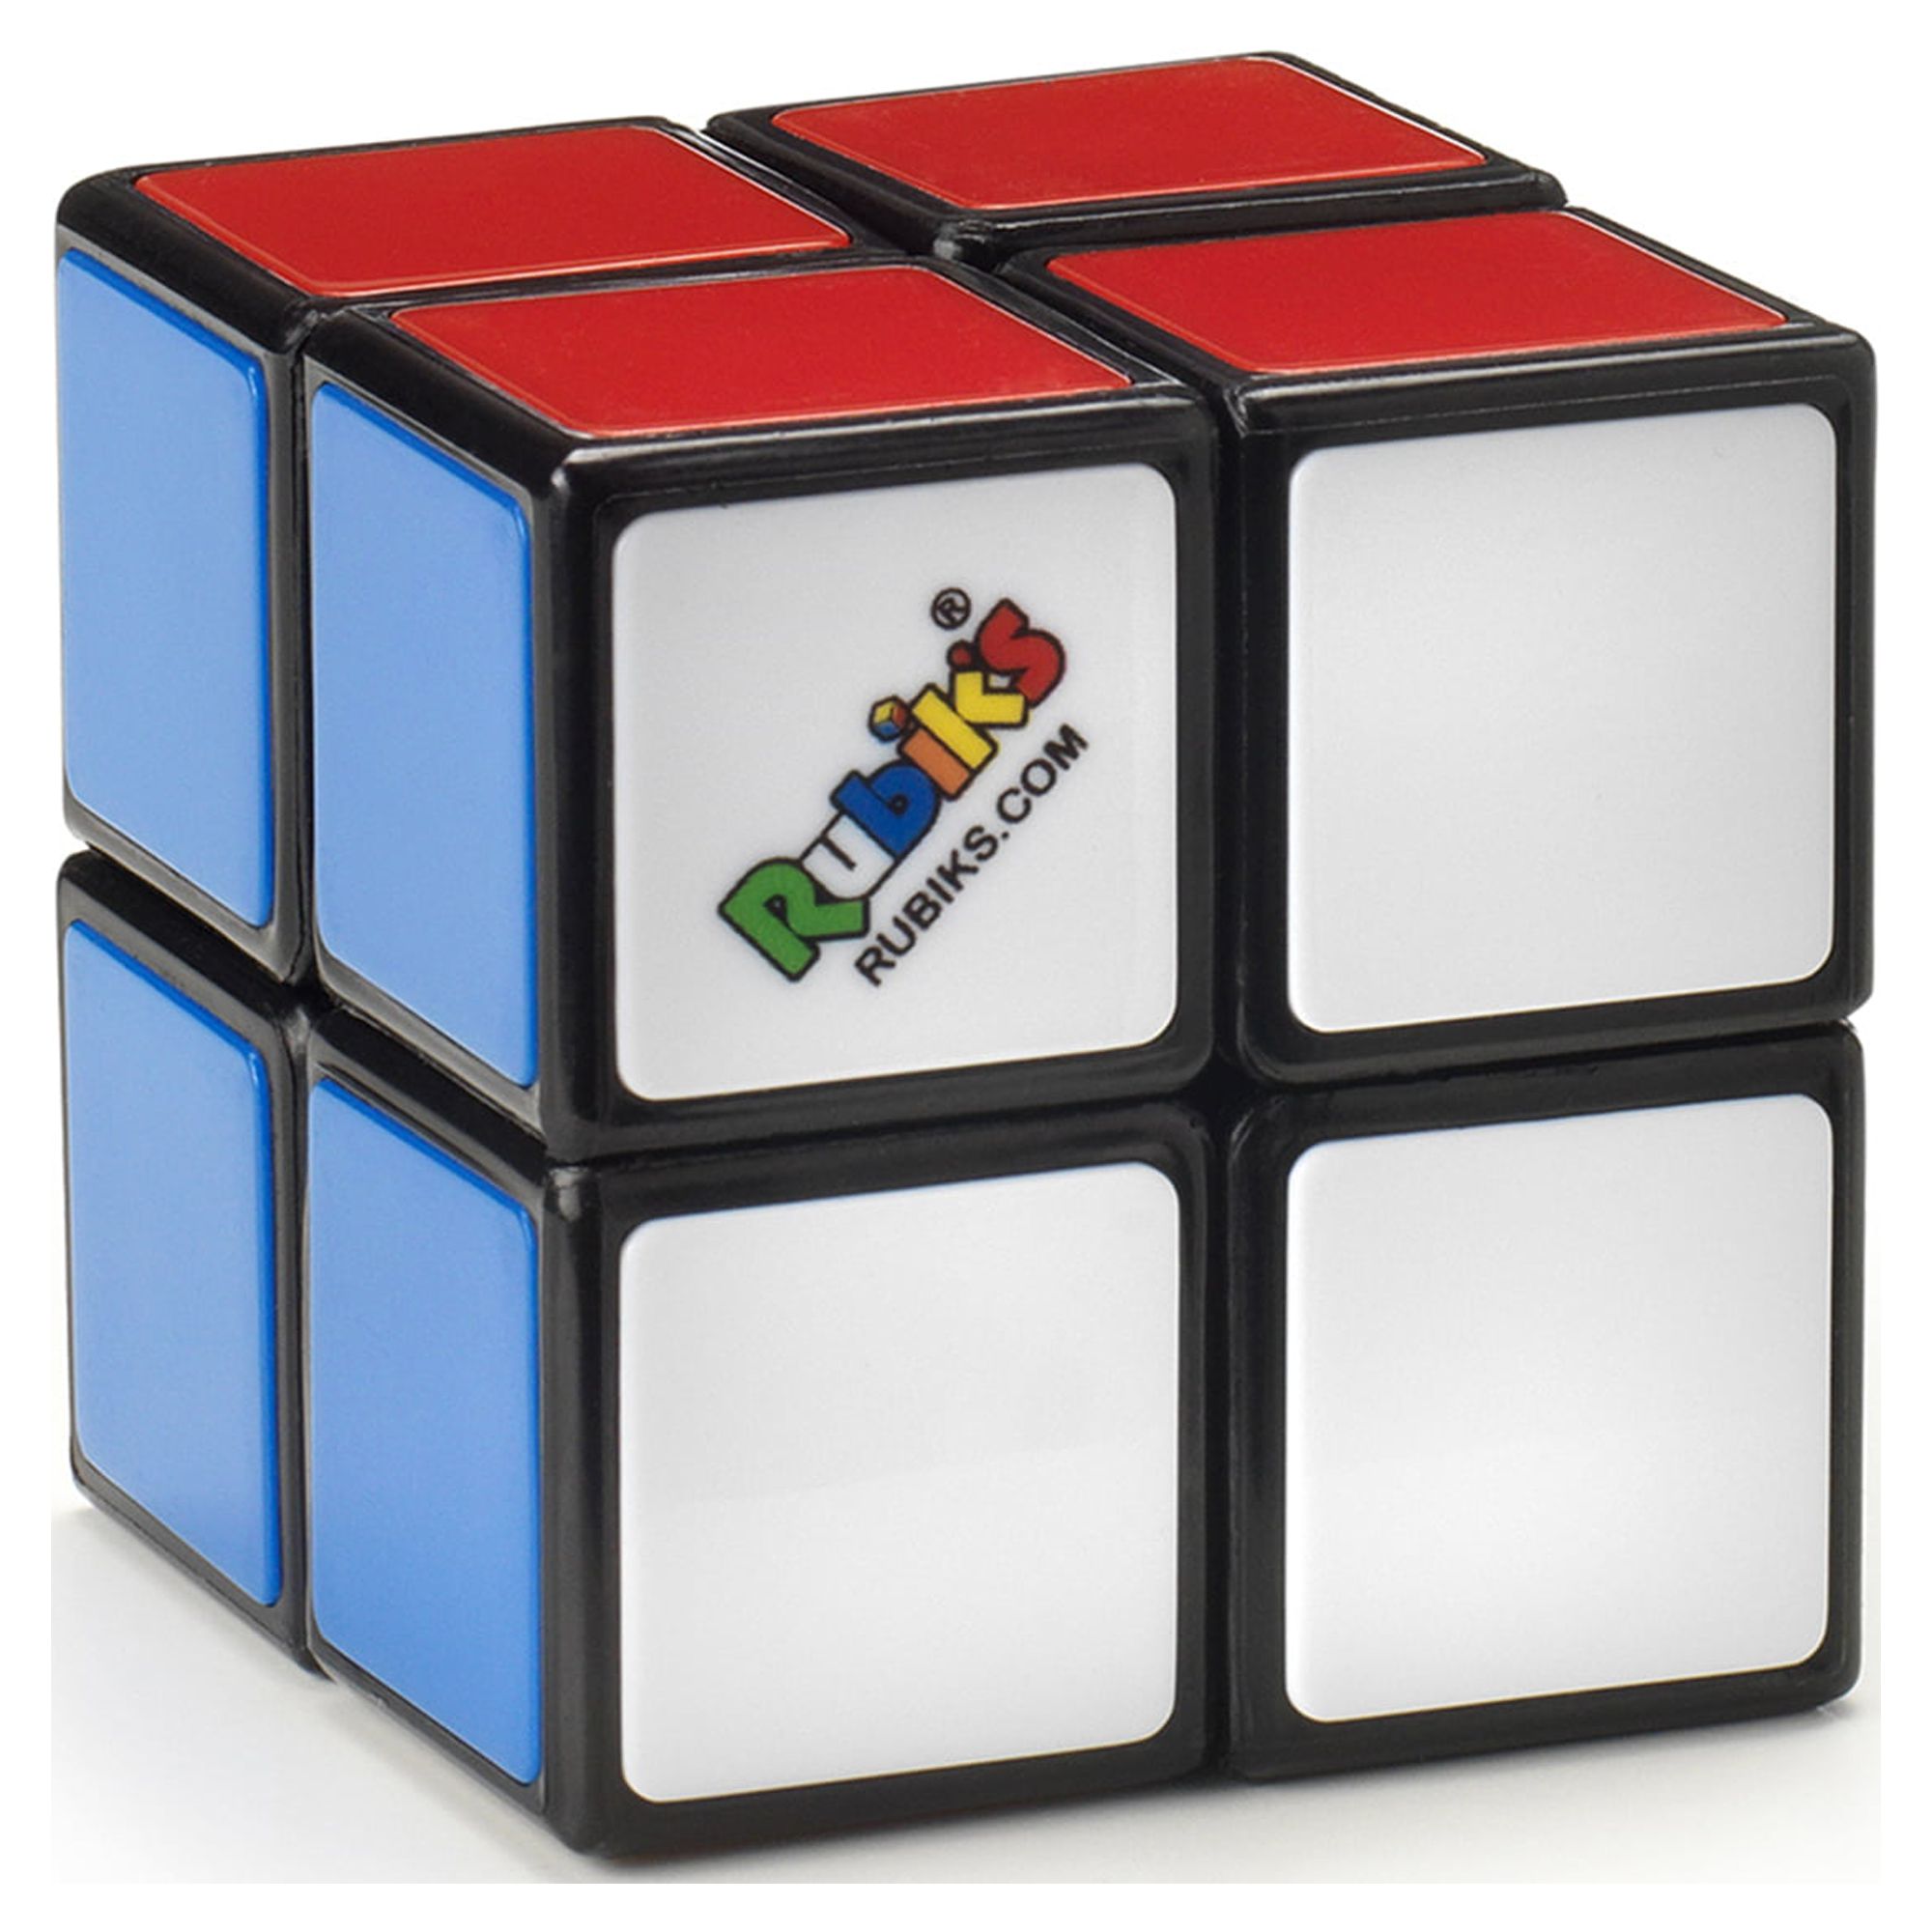 Hasbro Classic Rubik's 2X2 Puzzle Cube - image 2 of 9